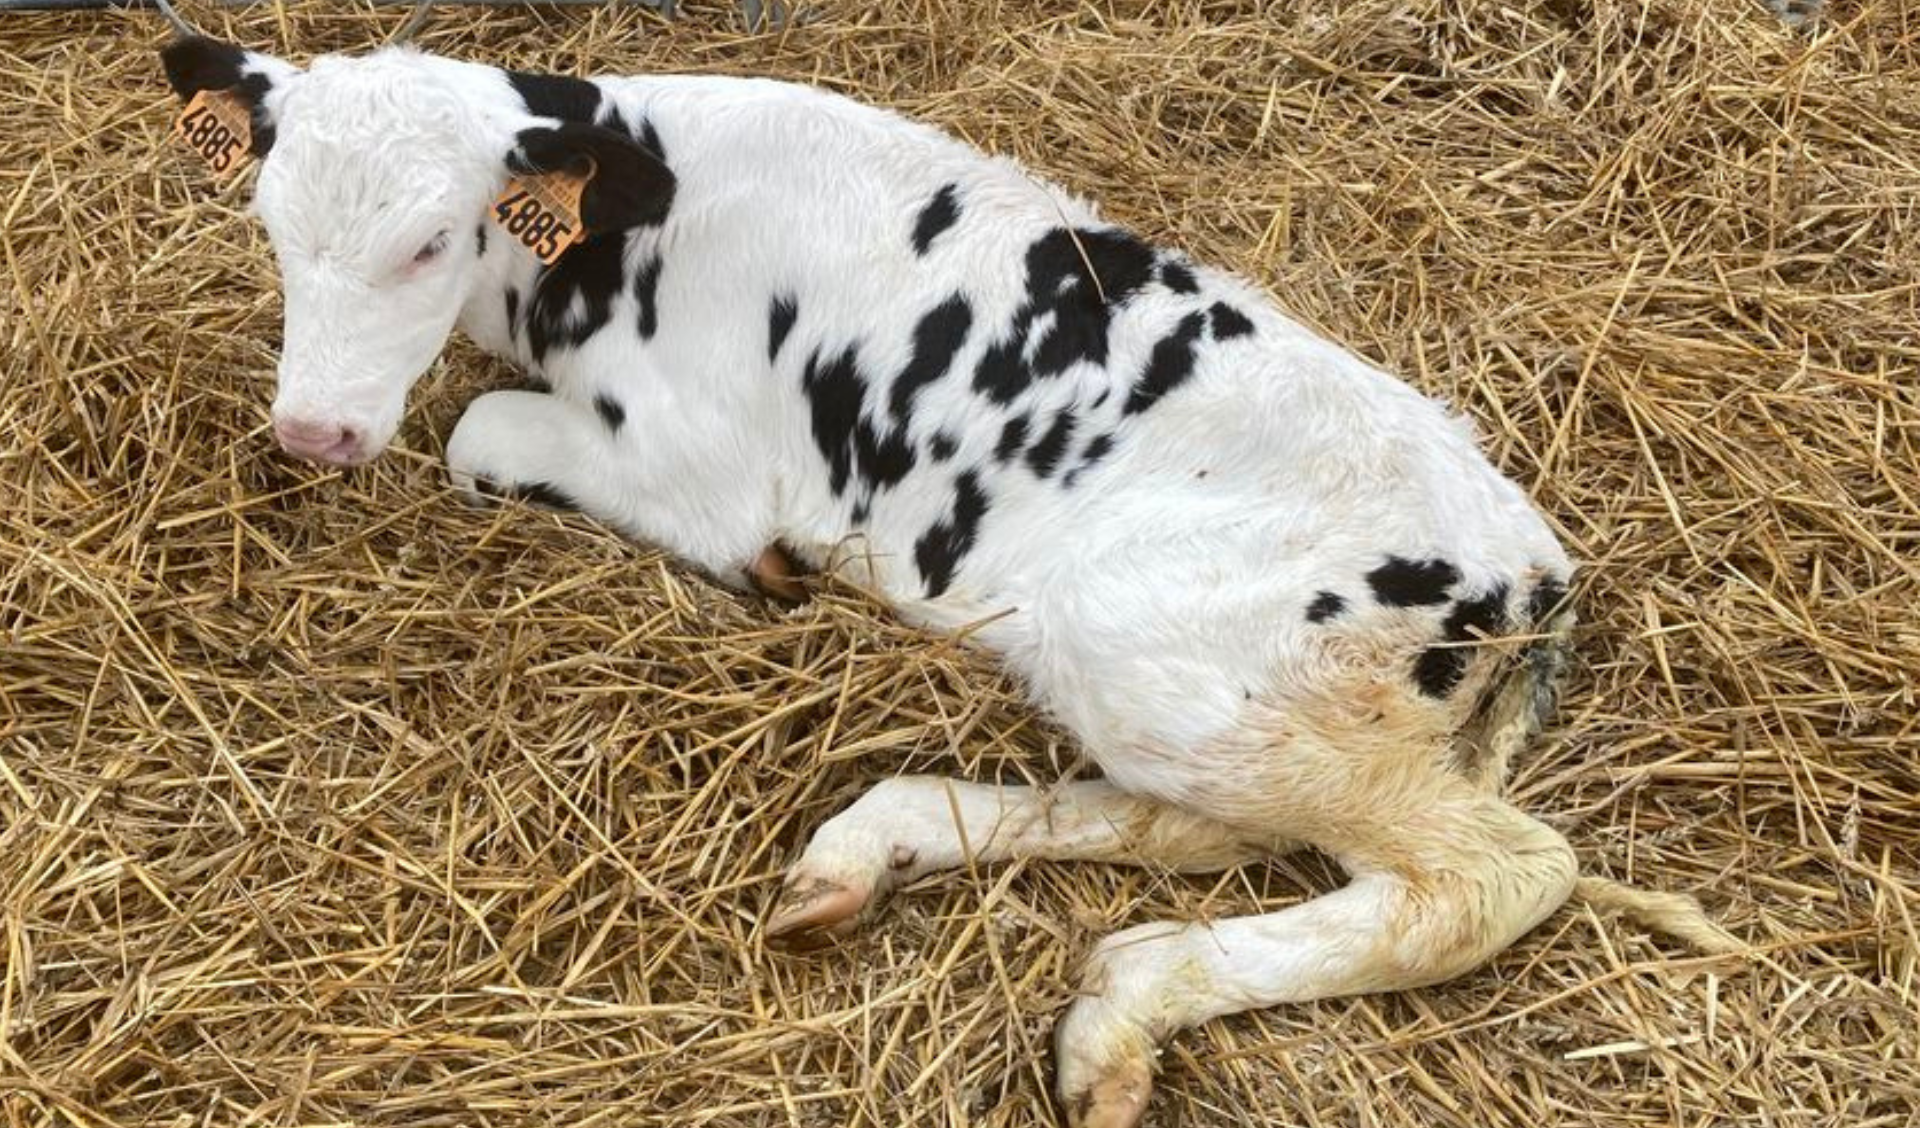 Sick calf in straw bedding